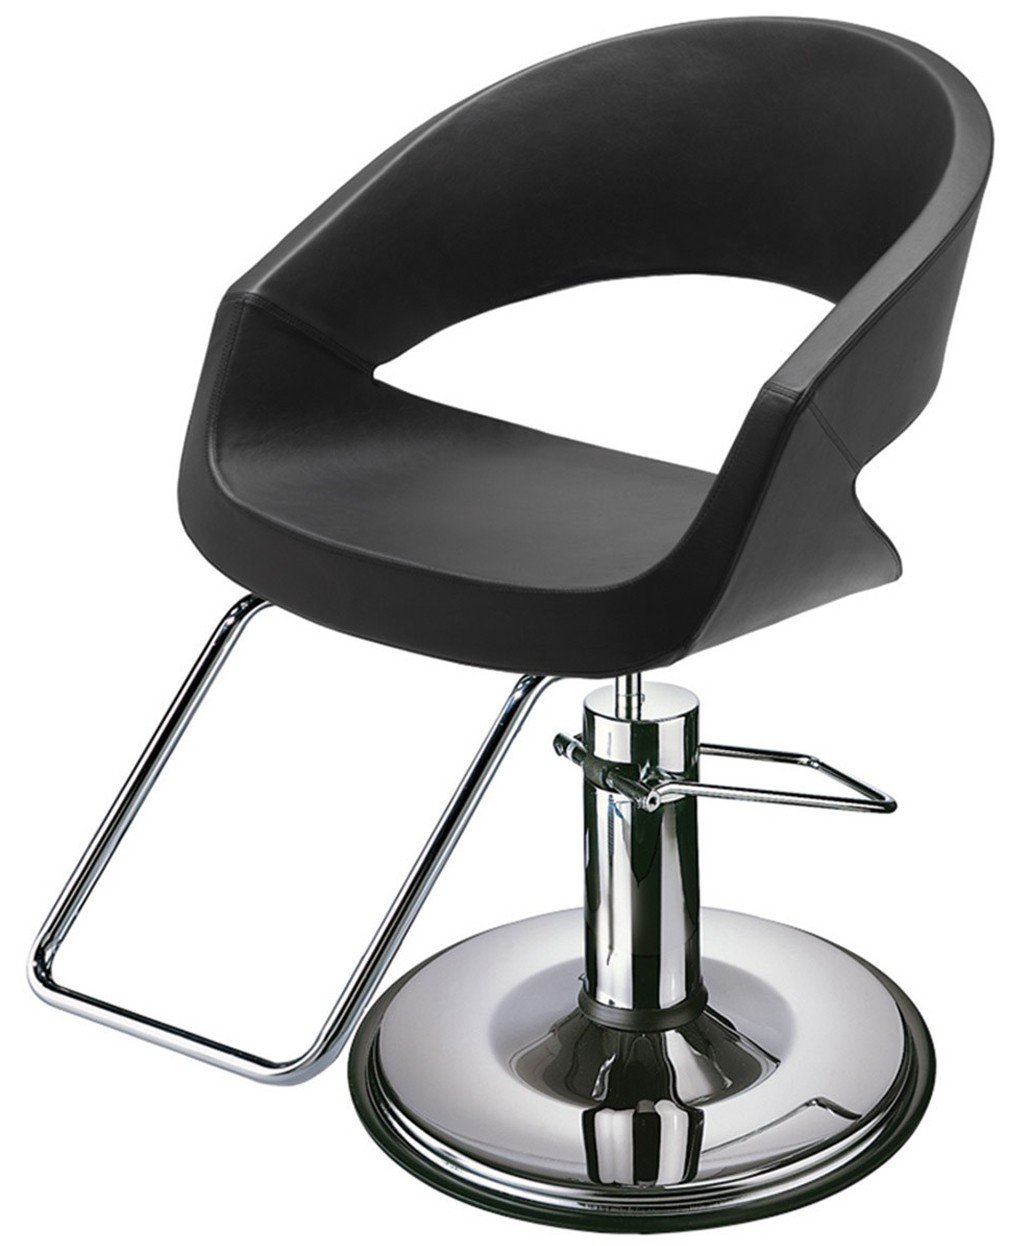 Takara Belmont ST-M80 Caruso Styling Chair